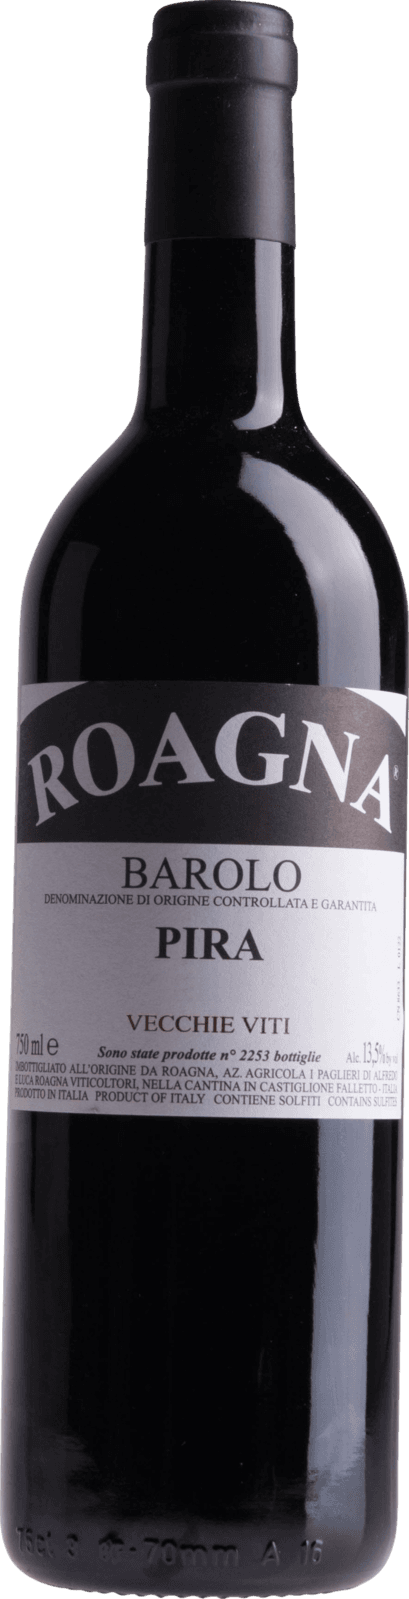 Roagna Barolo Pira 2016